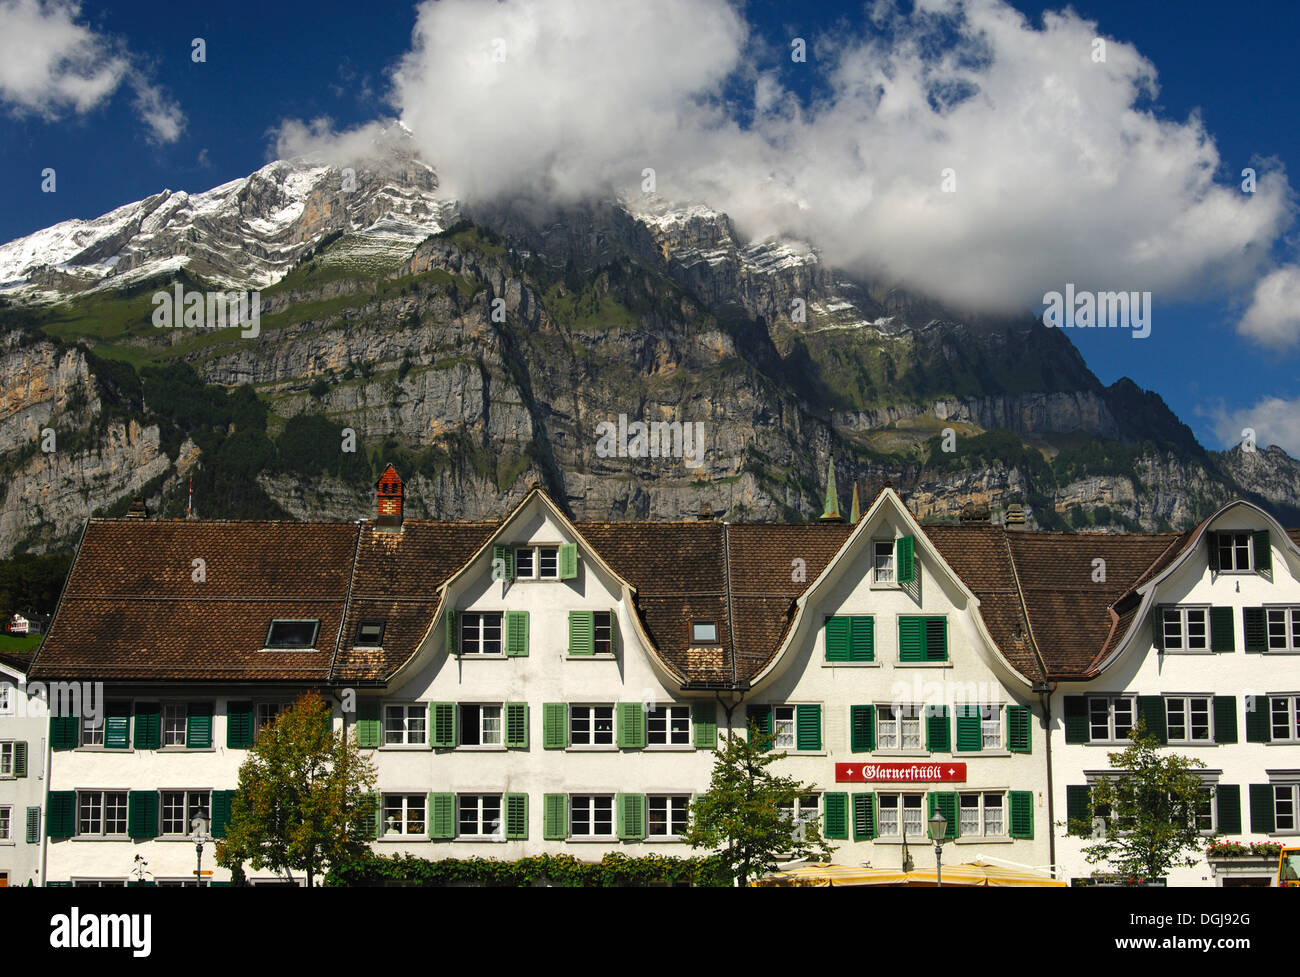 Row of houses in the Landsgemeindeplatz, town square, in front of the Glarus Alps, Glarus, Switzerland, Europe Stock Photo